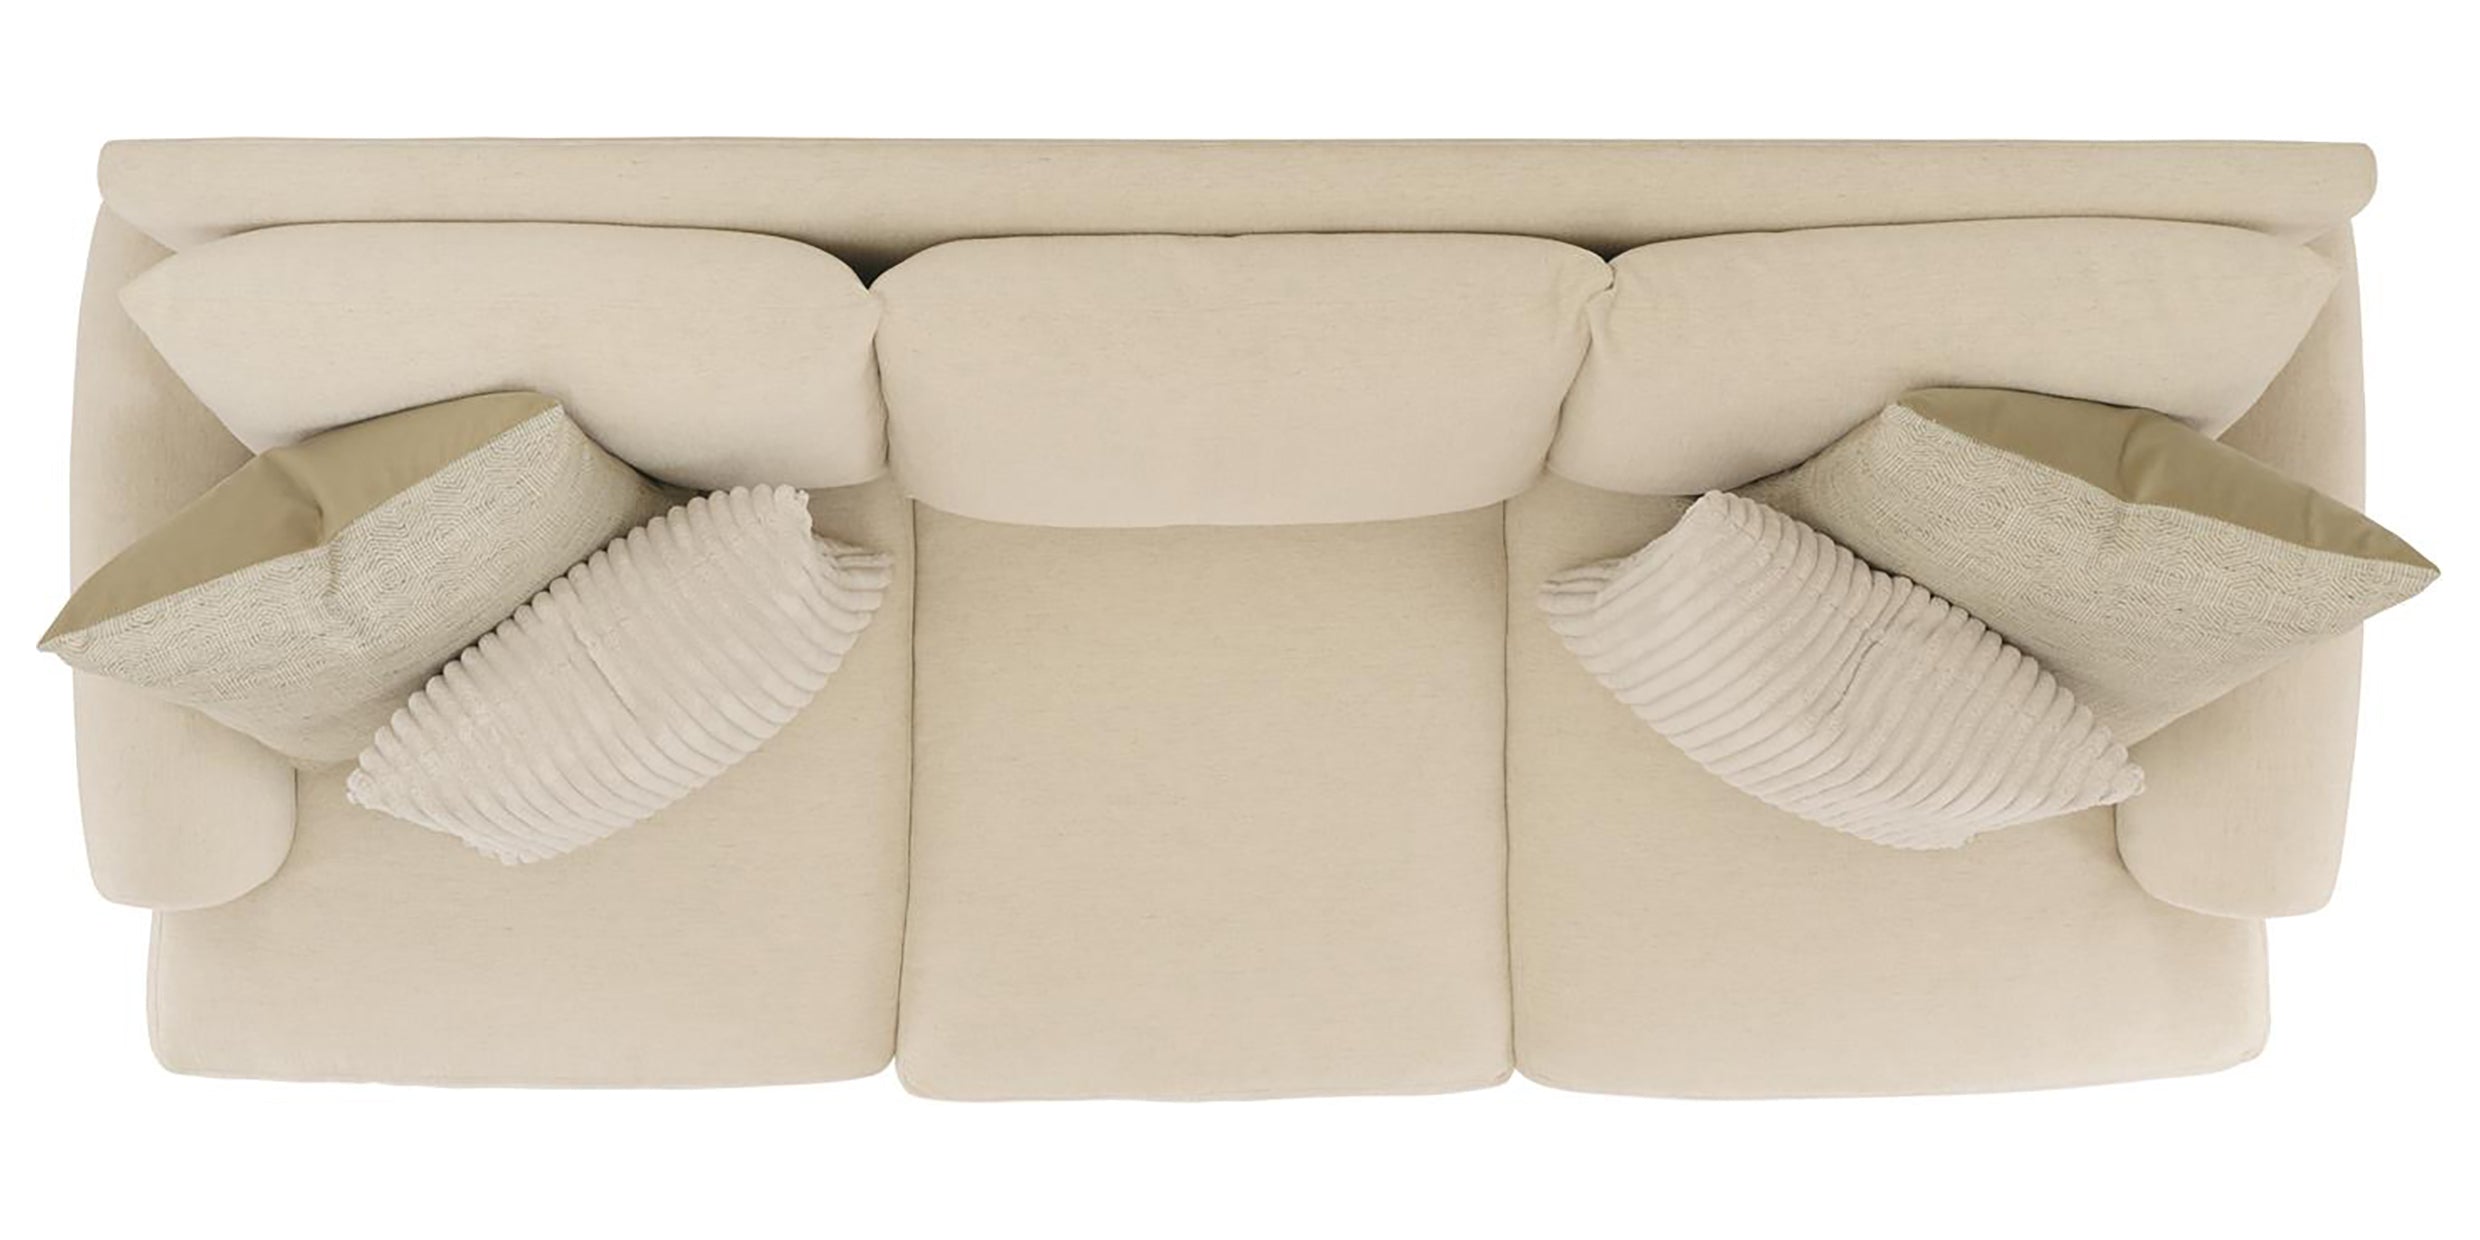 1662-002 Fabric | Bernhardt Isabella Fabric Sofa | Valley Ridge Furniture